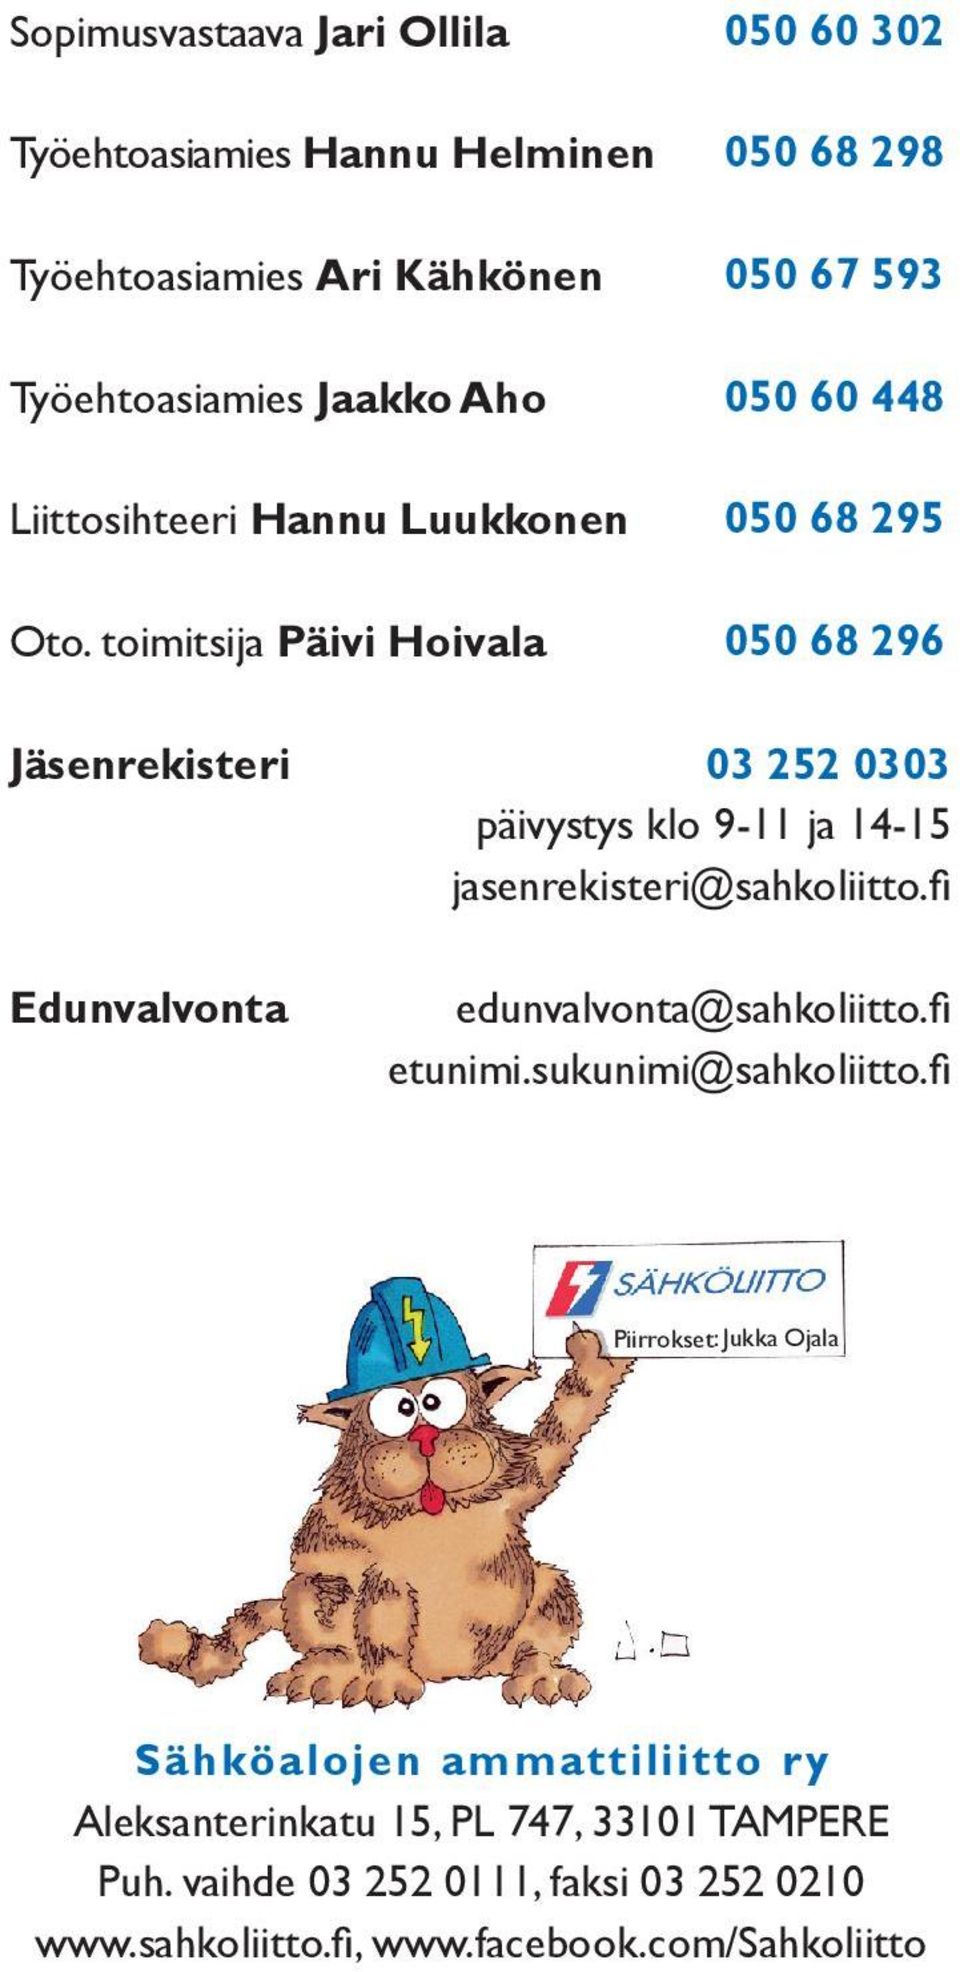 14-15 jasenrekisteri@sahkoliitto.fi Edunvalvonta edunvalvonta@sahkoliitto.fi etunimi.sukunimi@sahkoliitto.